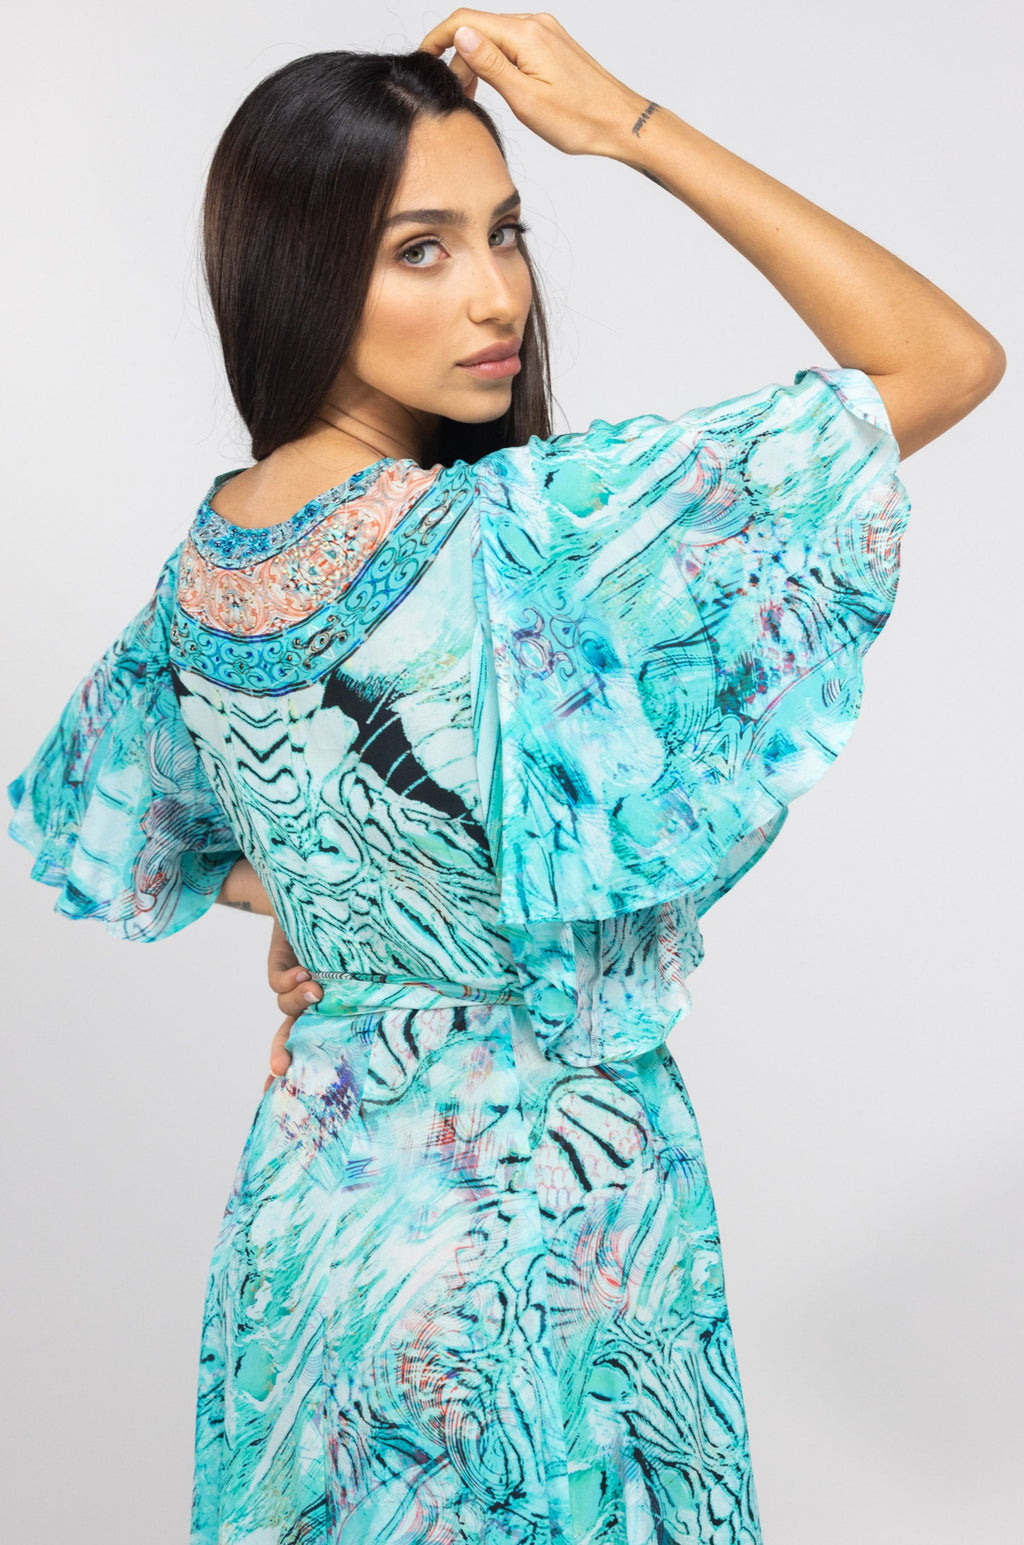 INOA Clothing Short Wrap Dress GAIA  Gold Coast Print Turquoise - Sub Couture